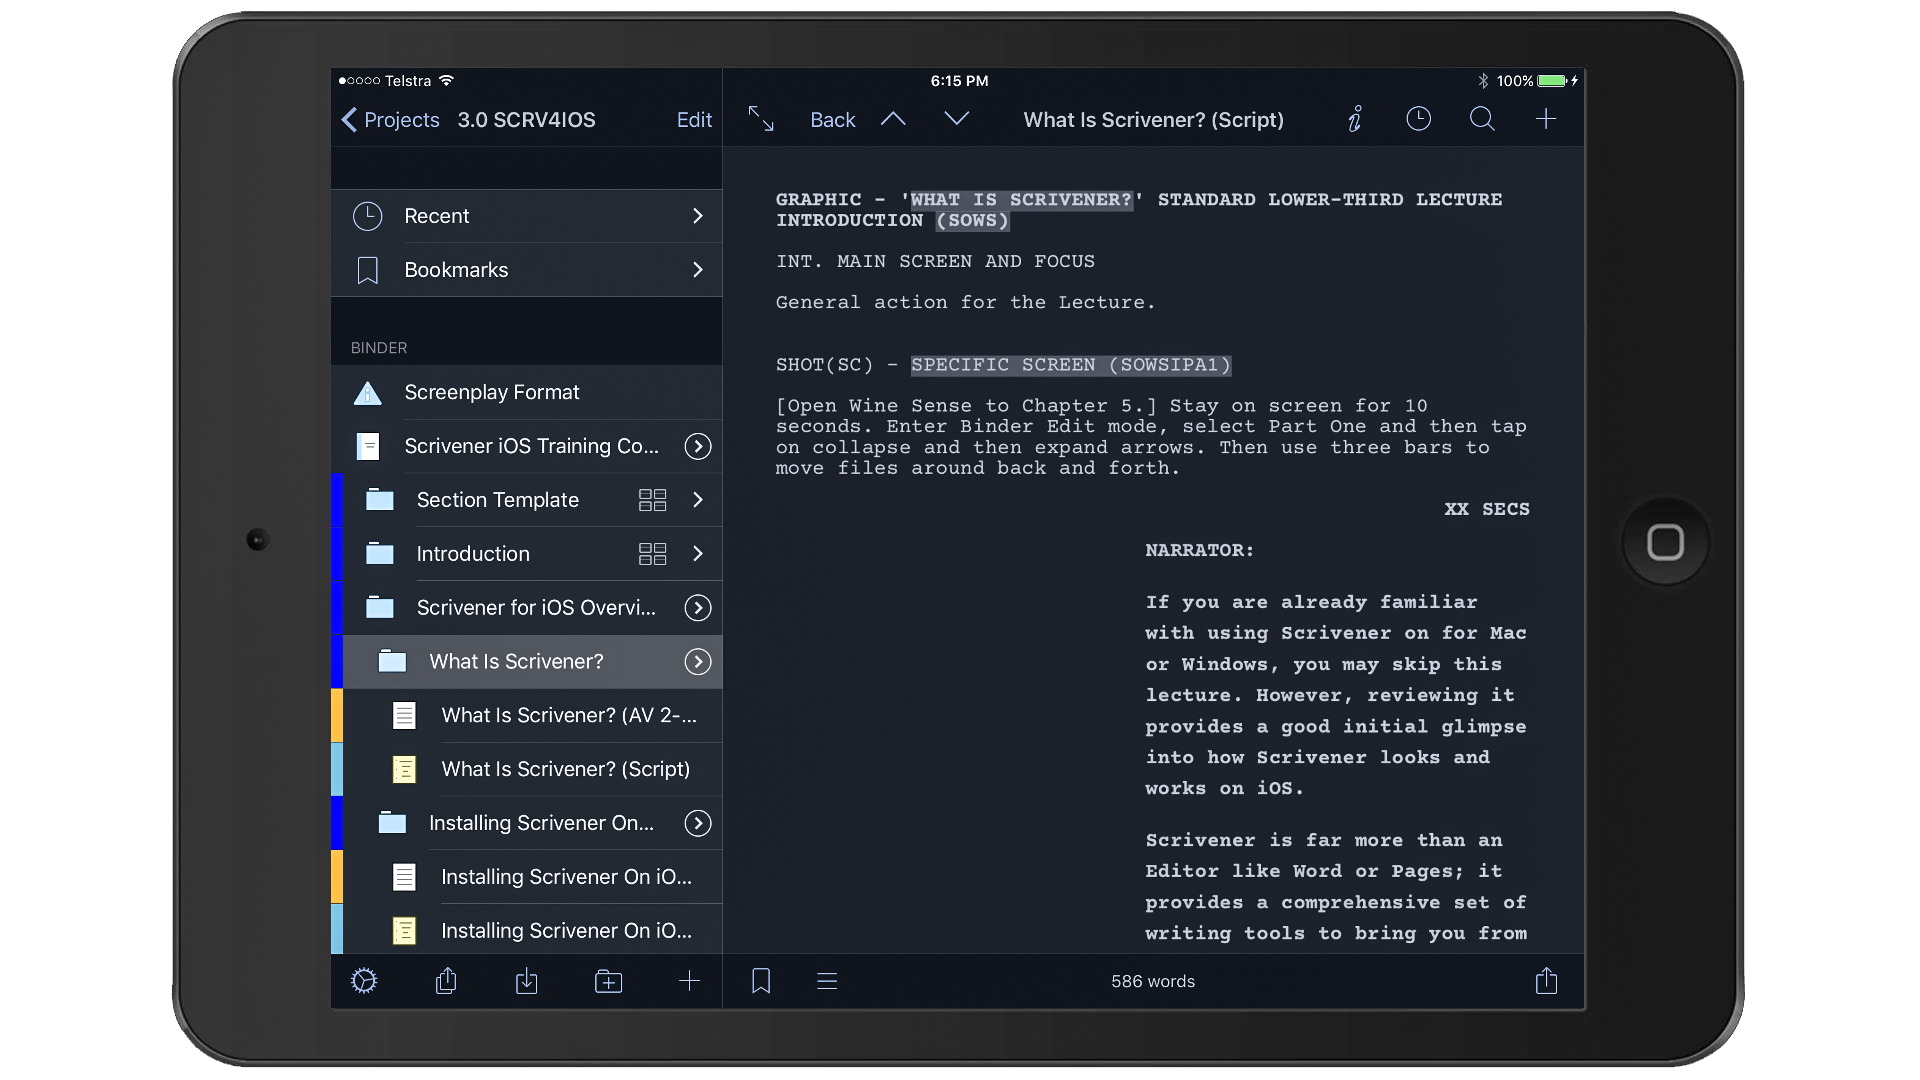 Activate Dark mode in Scrivener for iOS 1.1 - Scrivener for iOS Version 1.1 Update (new features)